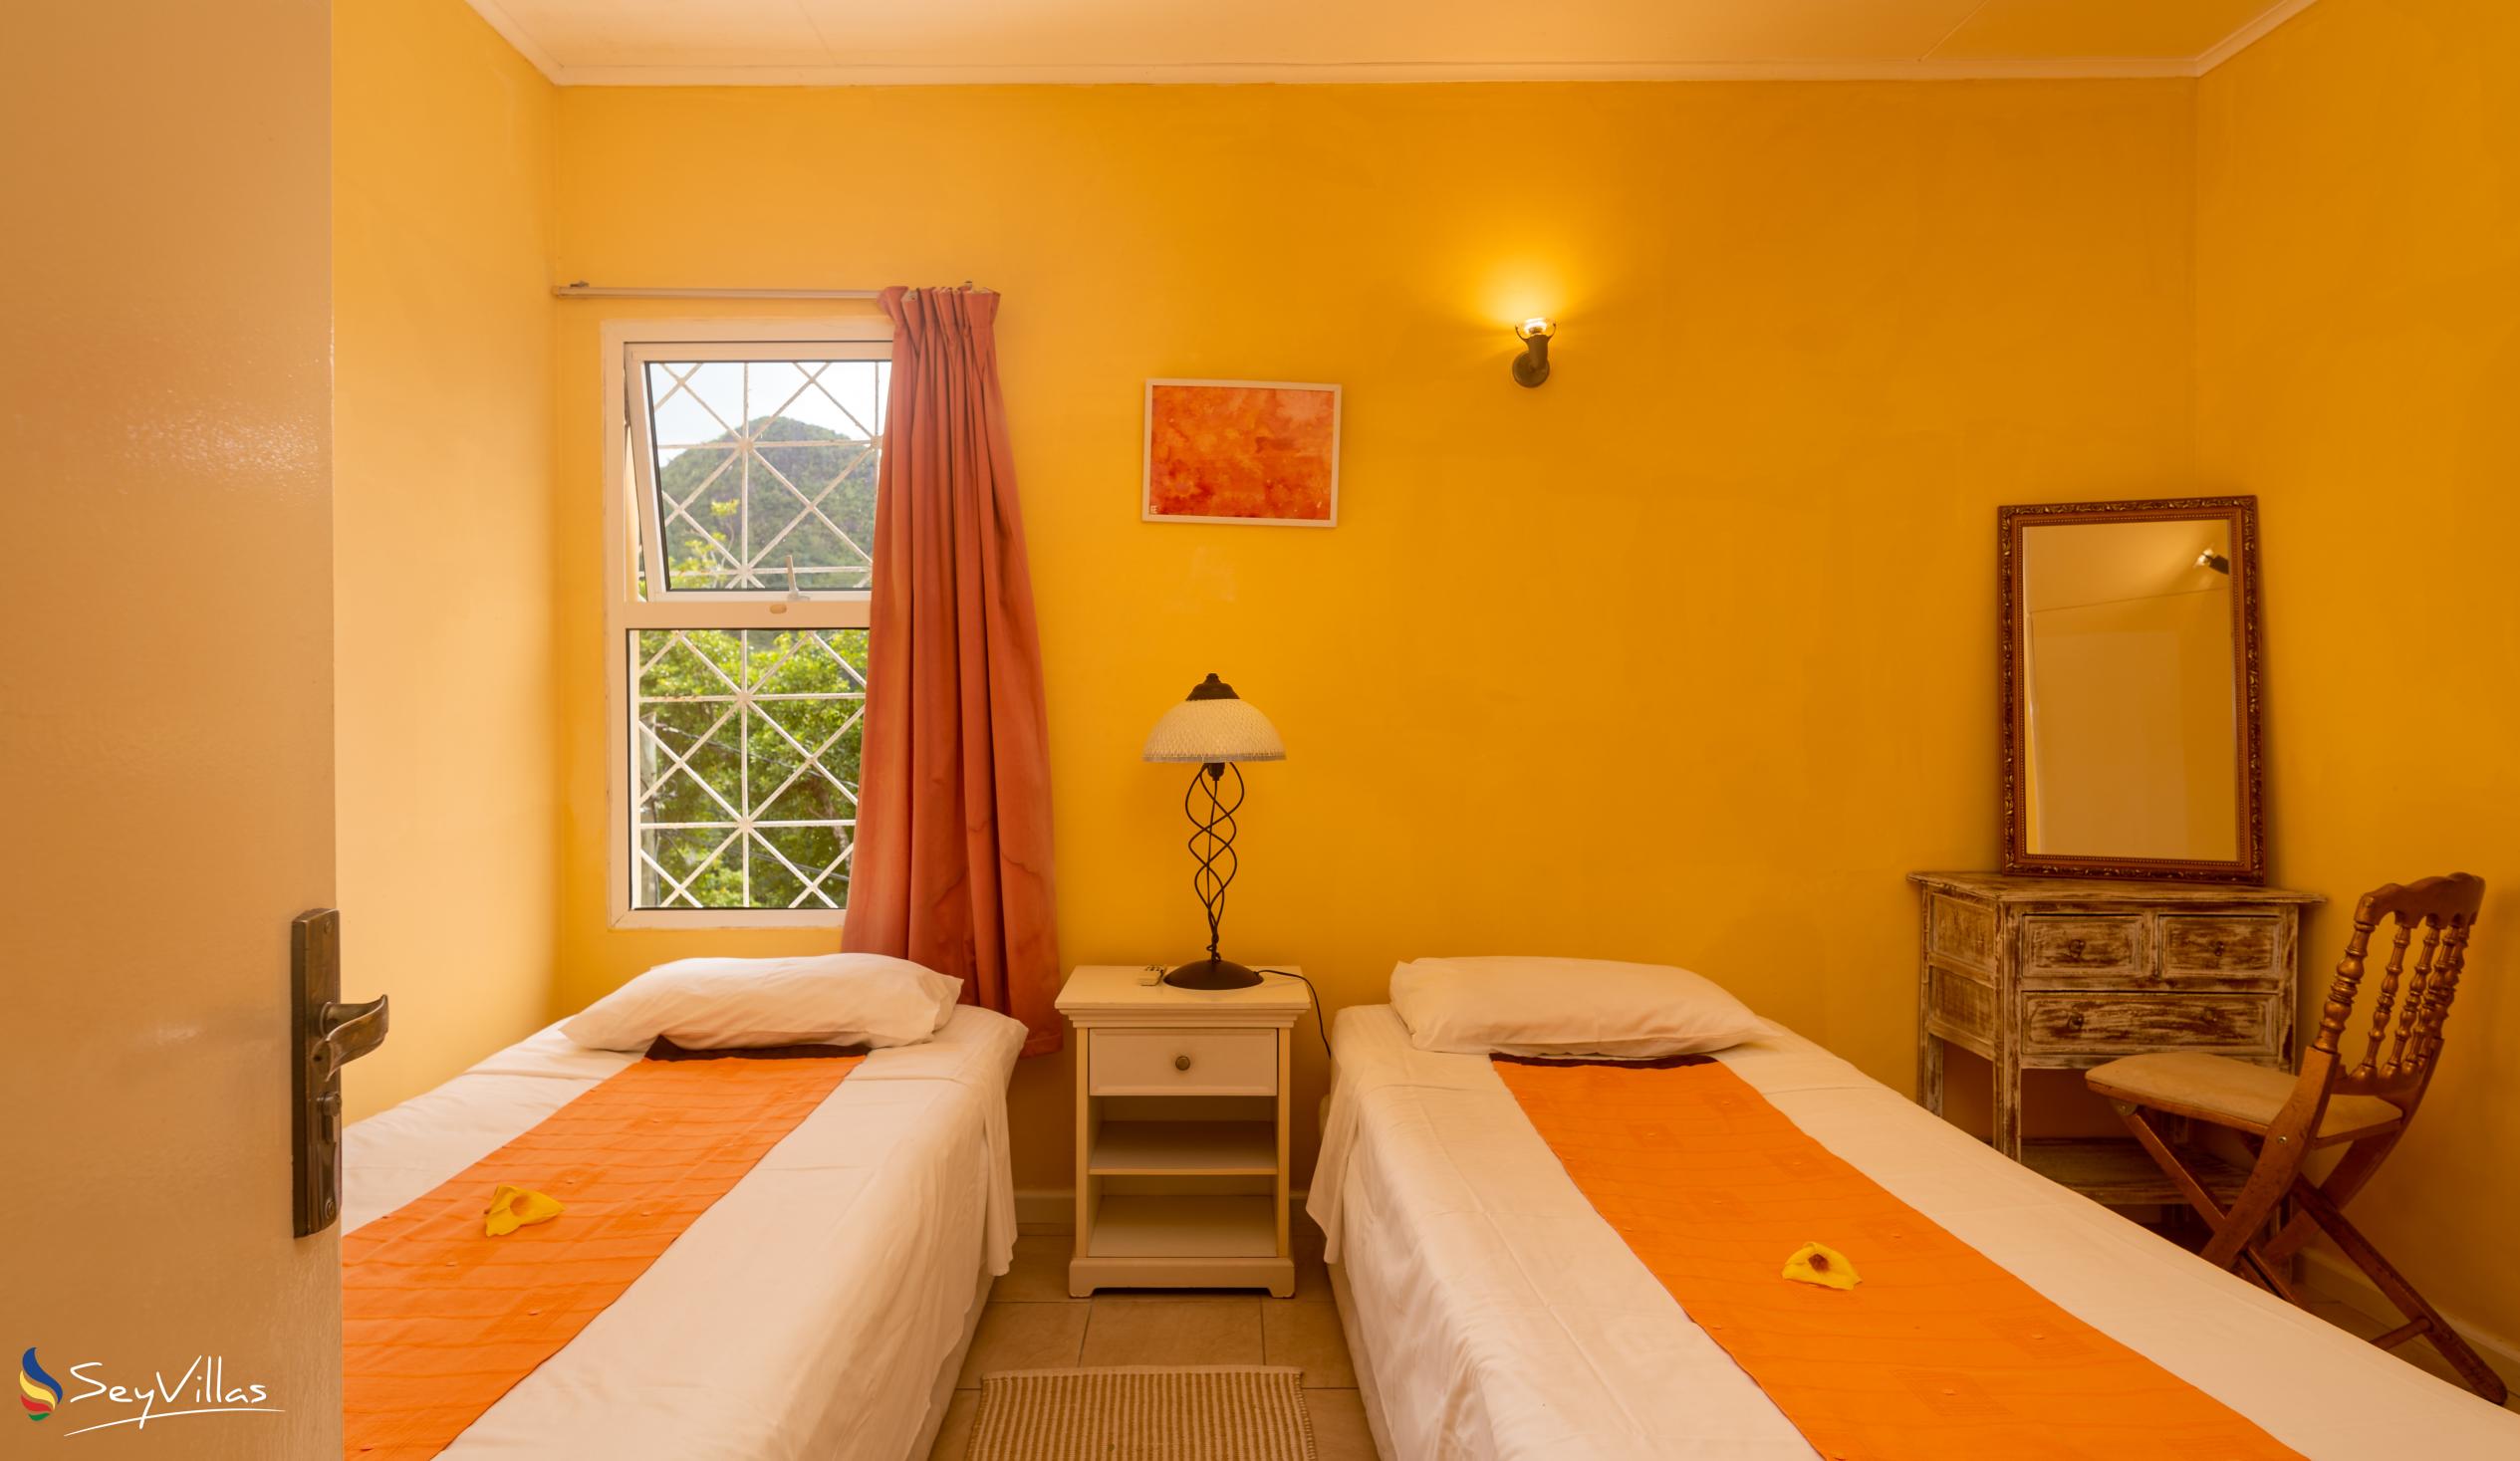 Photo 101: Residence Monte Cristo - 3-Bedroom Duplex - Mahé (Seychelles)